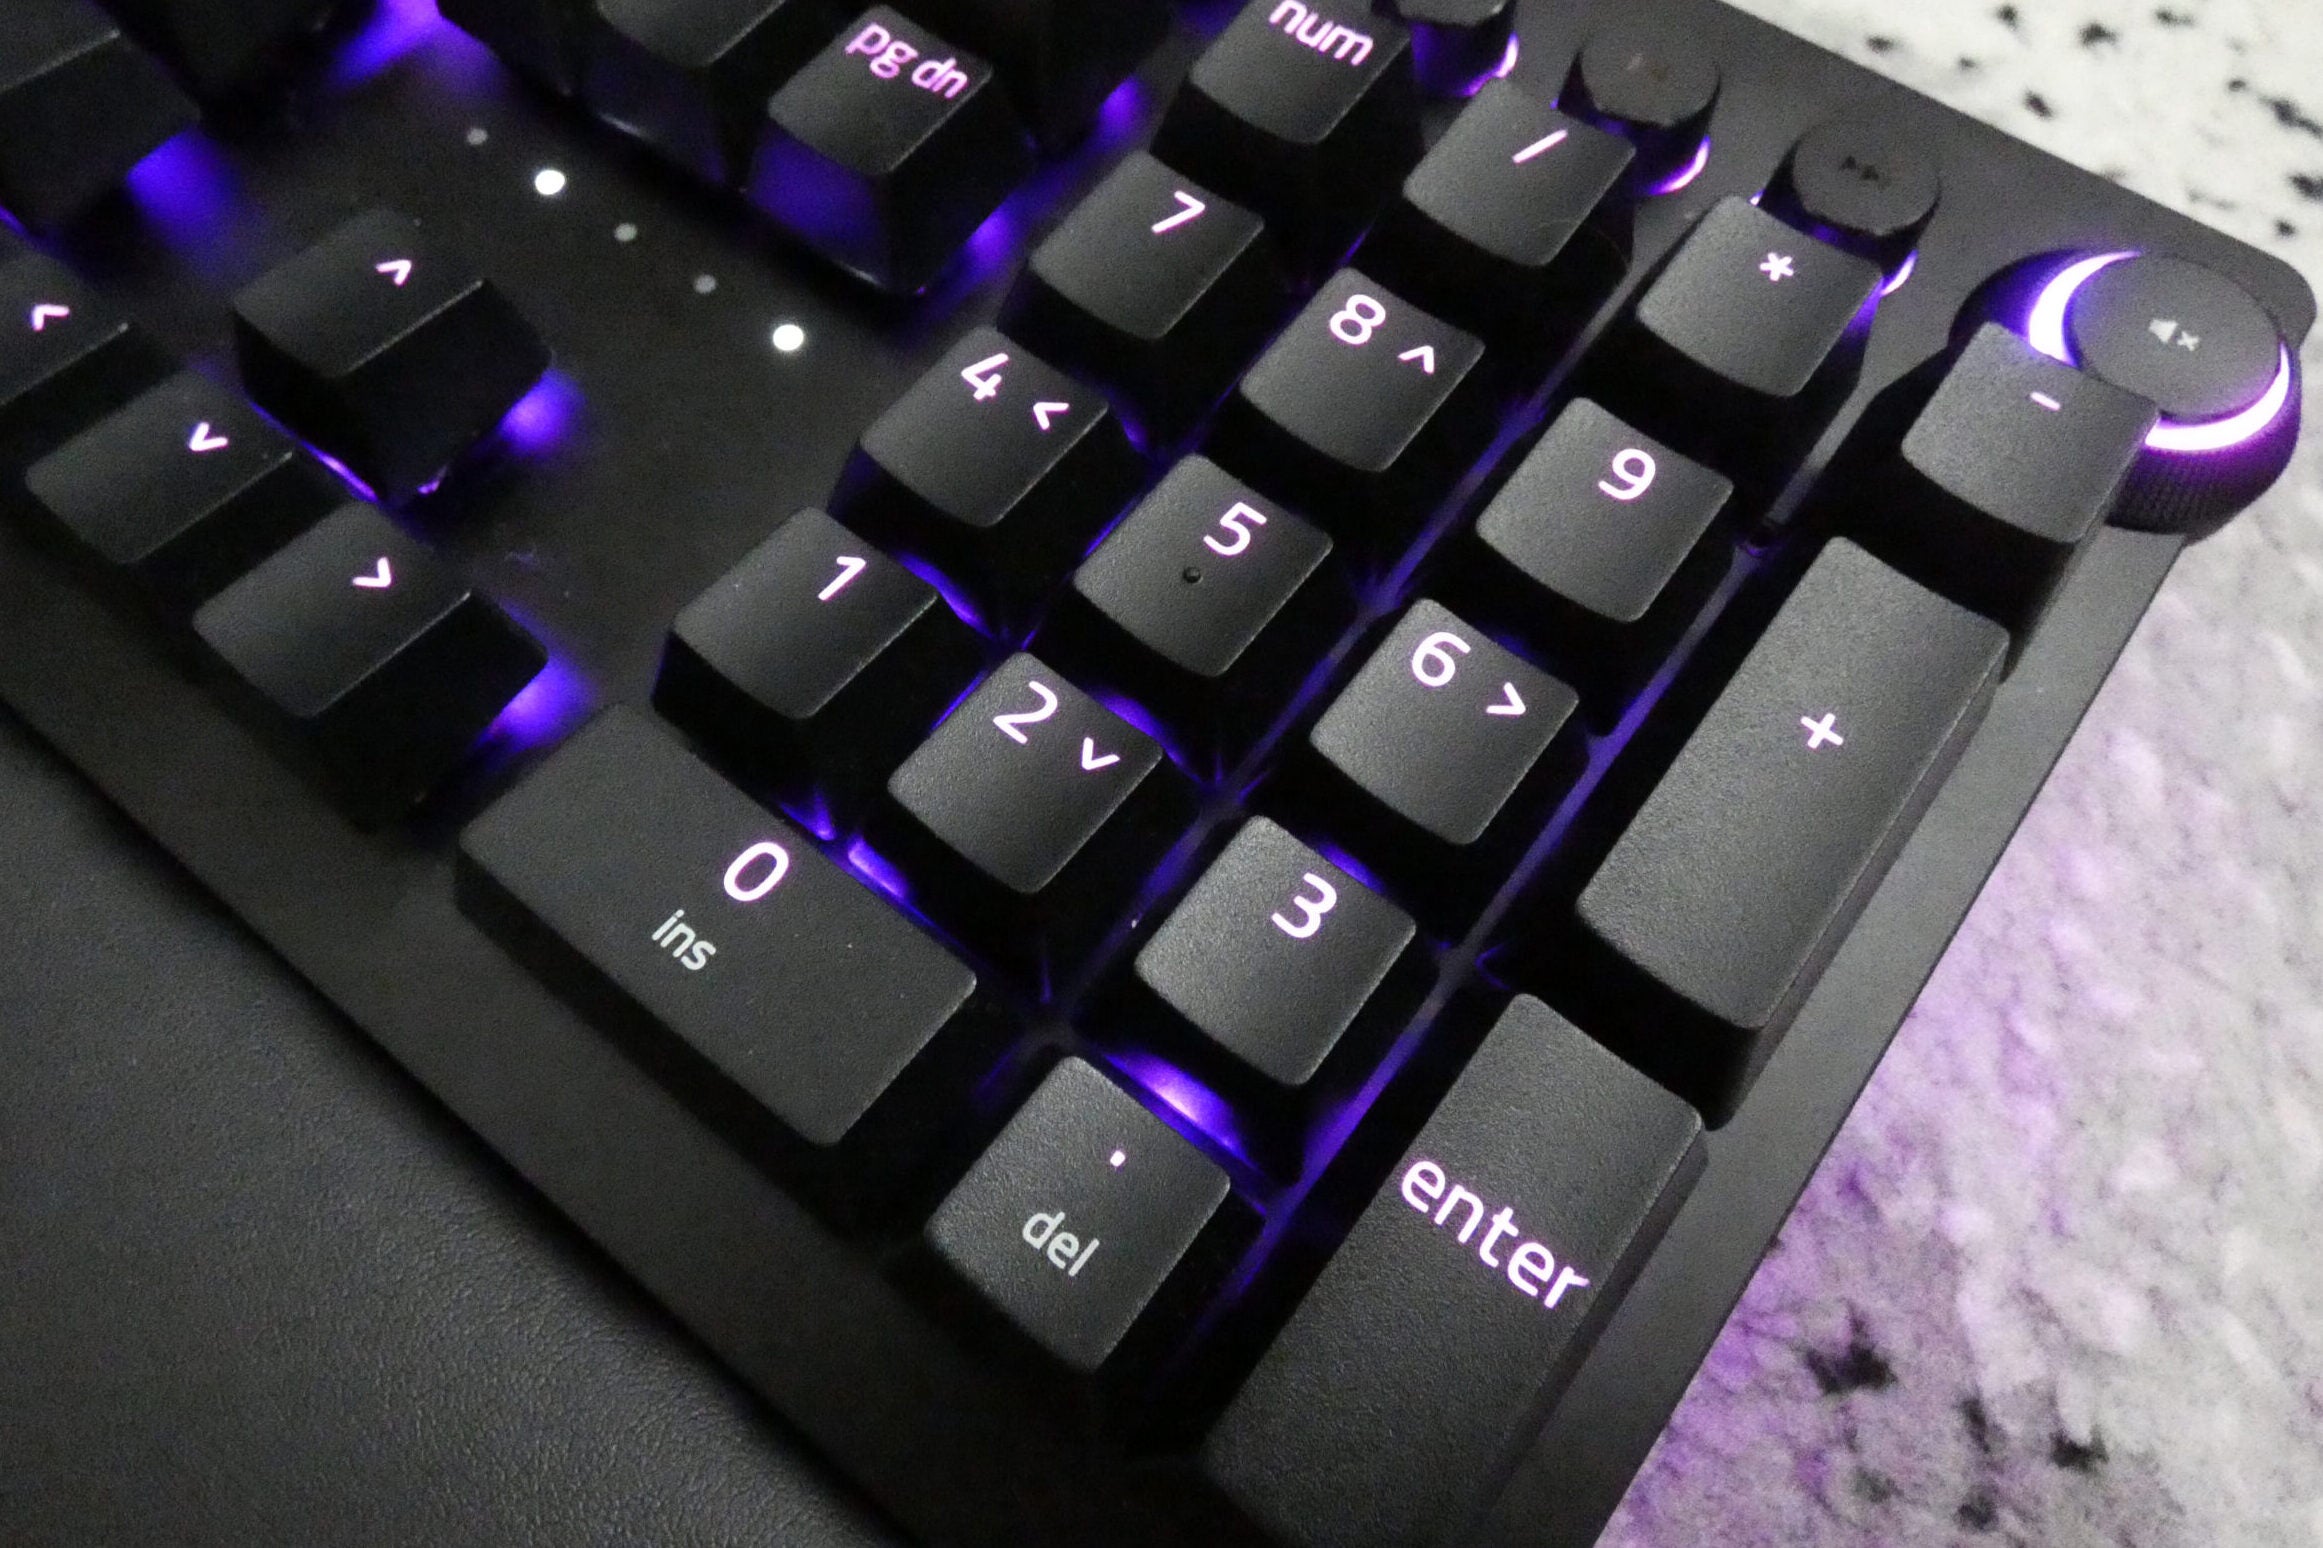 Razer Huntsman V2 AnalogClose up image of a black Huntsman V2 Analog keyboard's numpad section with blue light beneath the keys